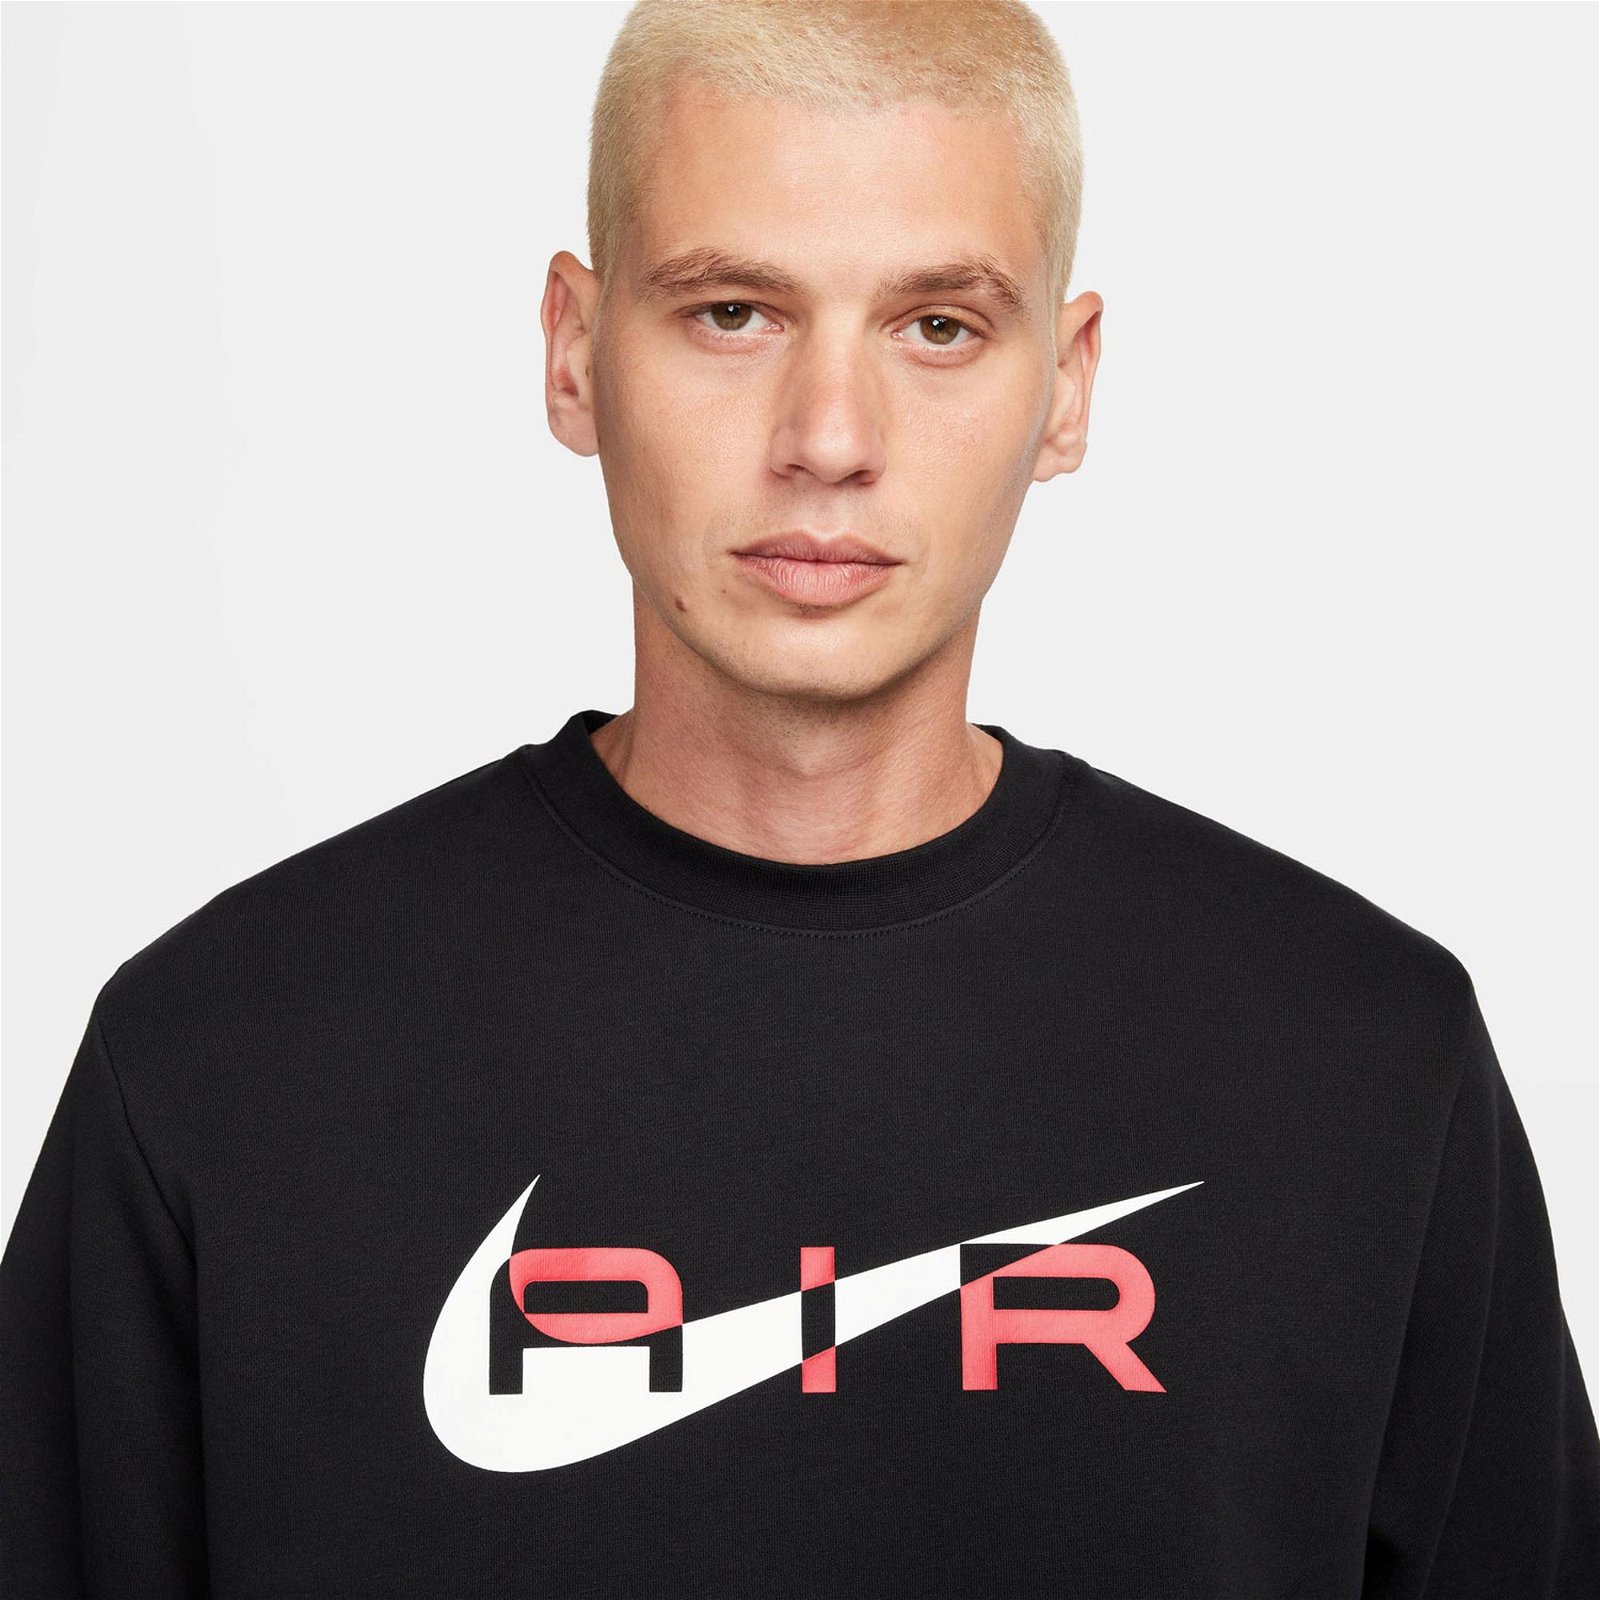 Nike Sportswear Air Fleece Erkek Siyah Sweatshirt